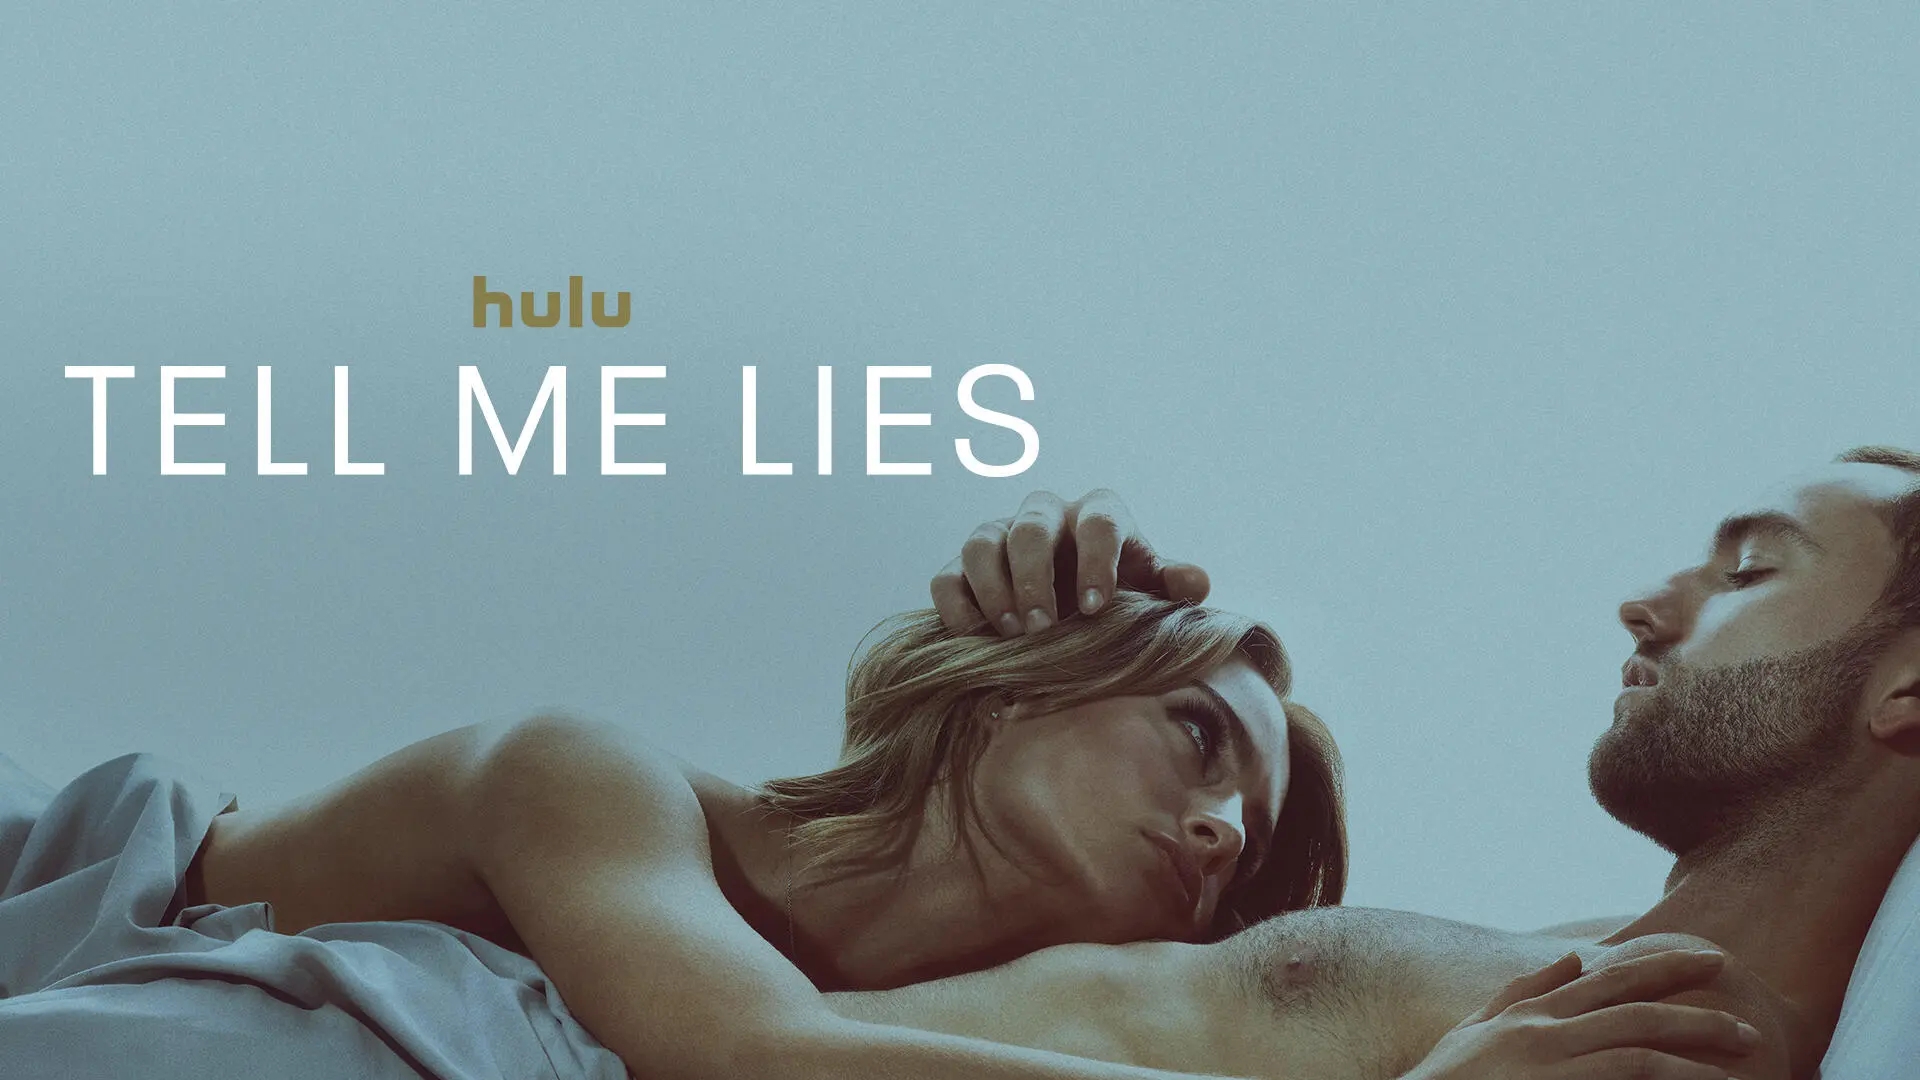 Title art for the Hulu original series Tell Me Lies